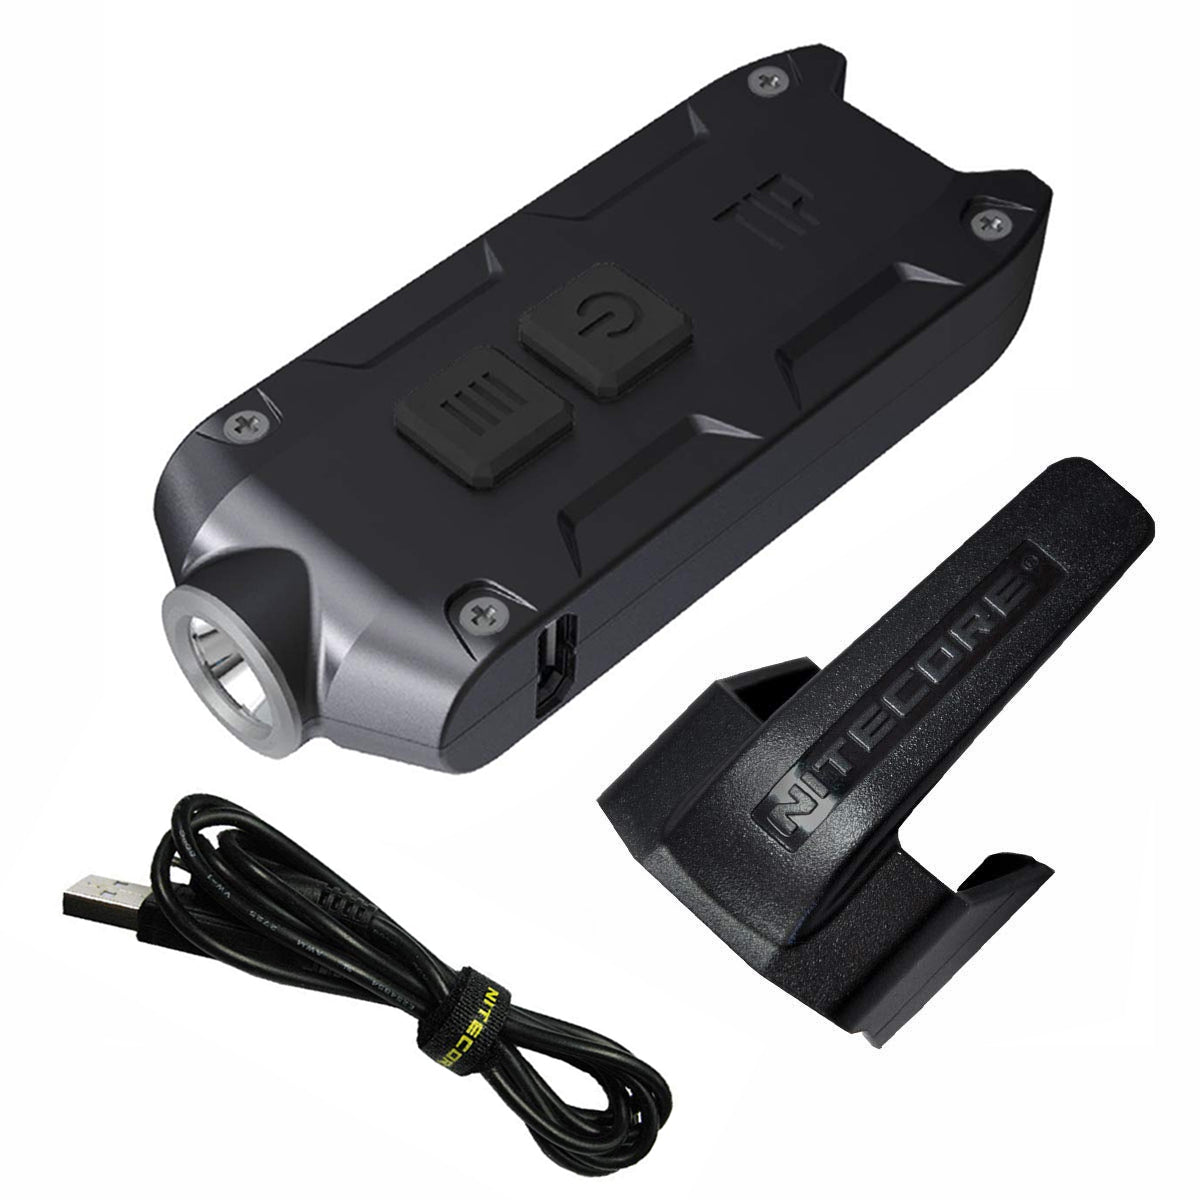 Nitecore TIP 2017 Upgrade 360 Lumens USB Rechargeable Keychain Flashlight & Nitecore USB Charging Cable